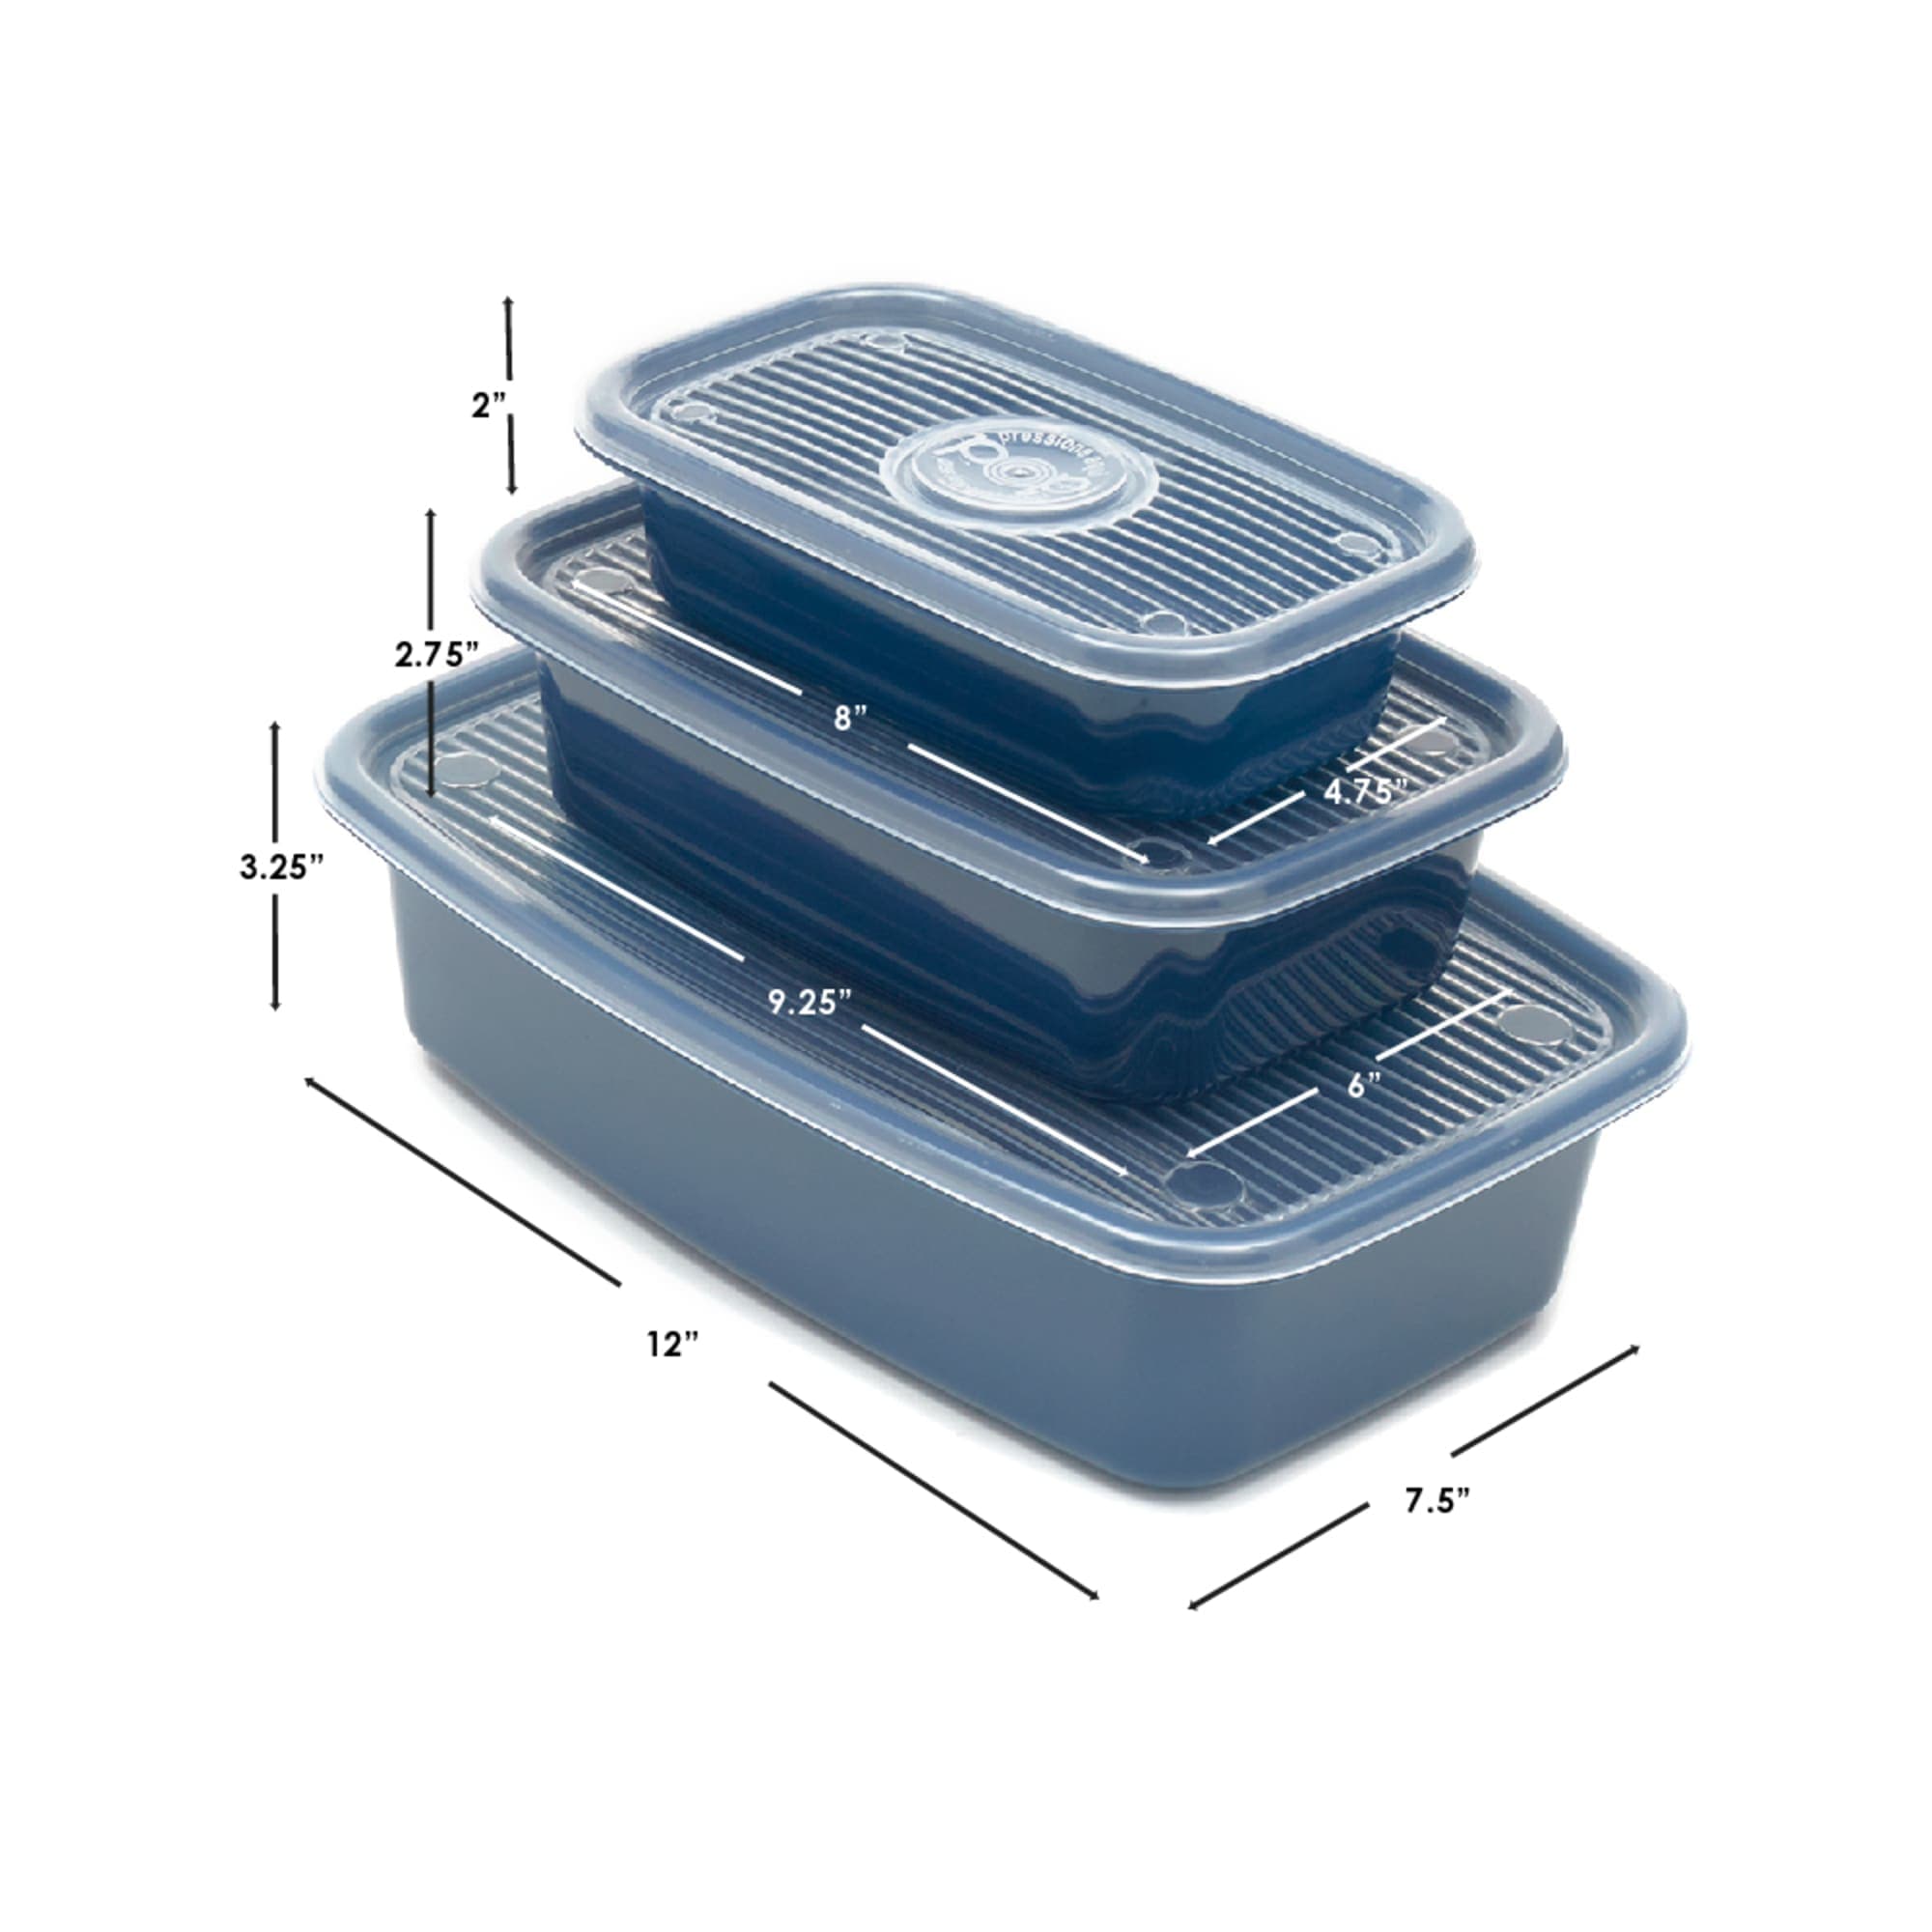 Home Basics 6 Piece Rectangular Plastic Meal Prep Set, Blue $6.00 EACH, CASE PACK OF 7